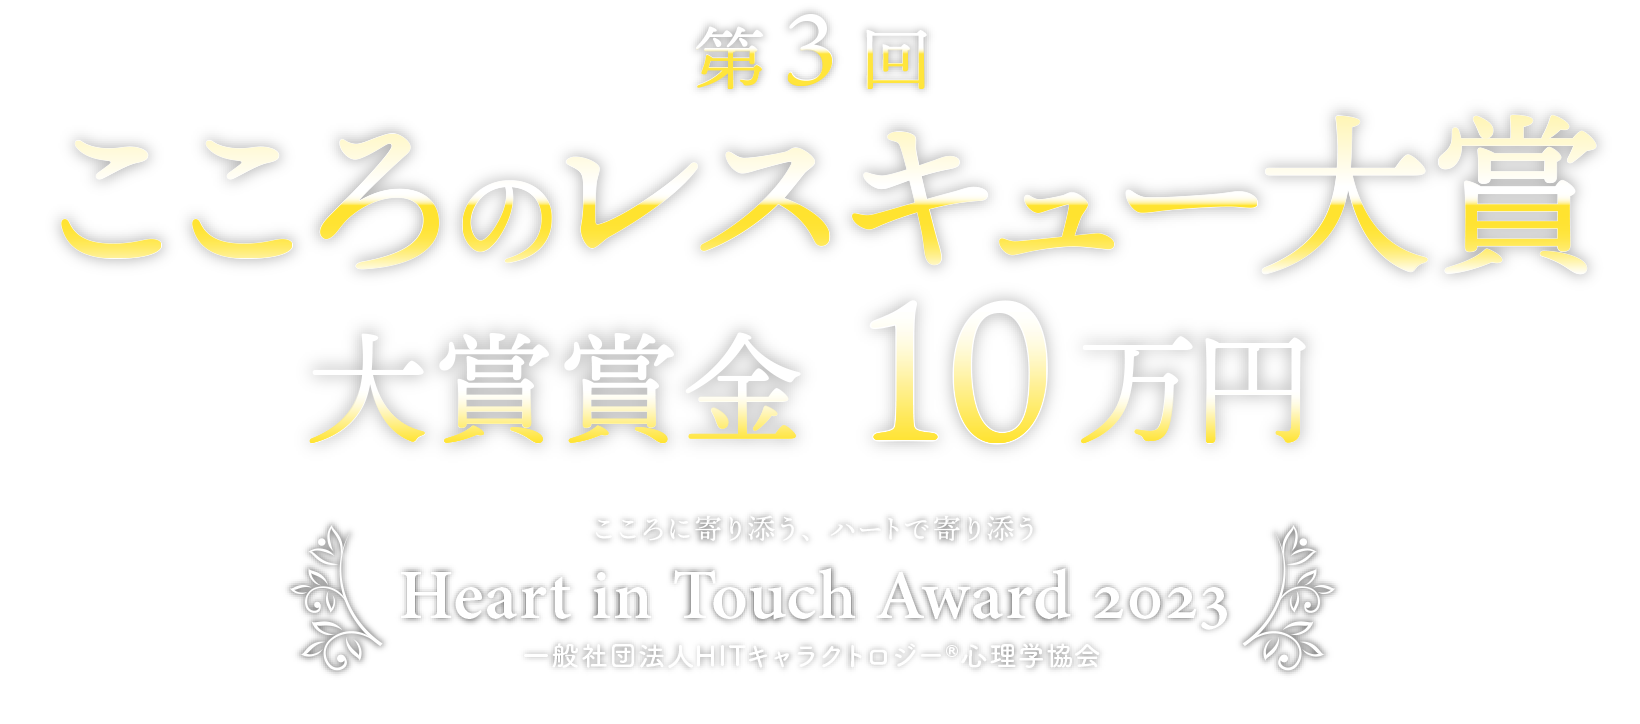 Heart in Touch Award 2022 一般社団法人キャラクトロジー心理学協会